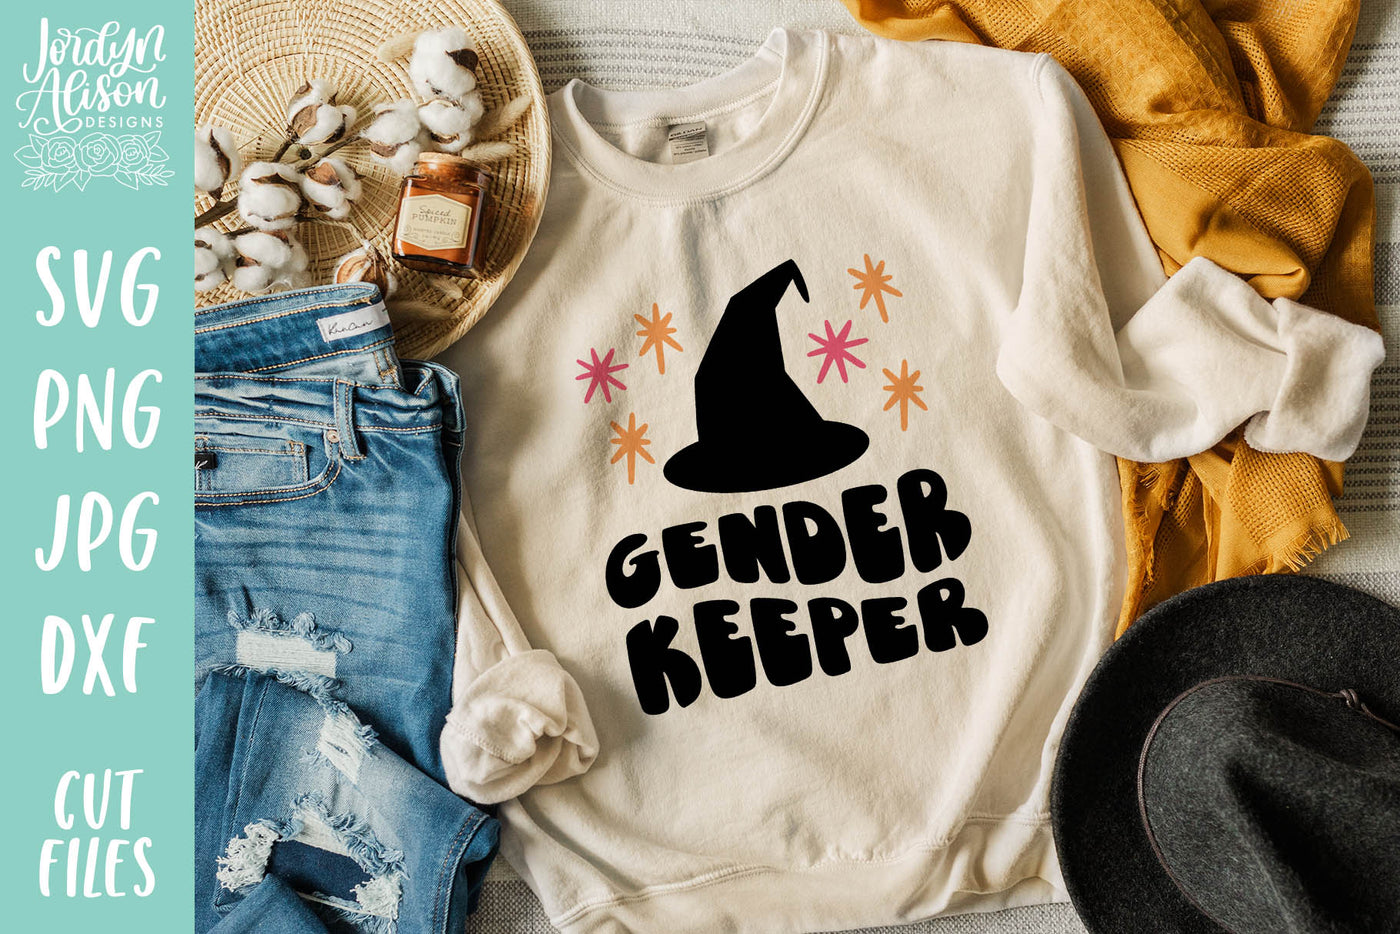 Gender Keeper Witch SVG